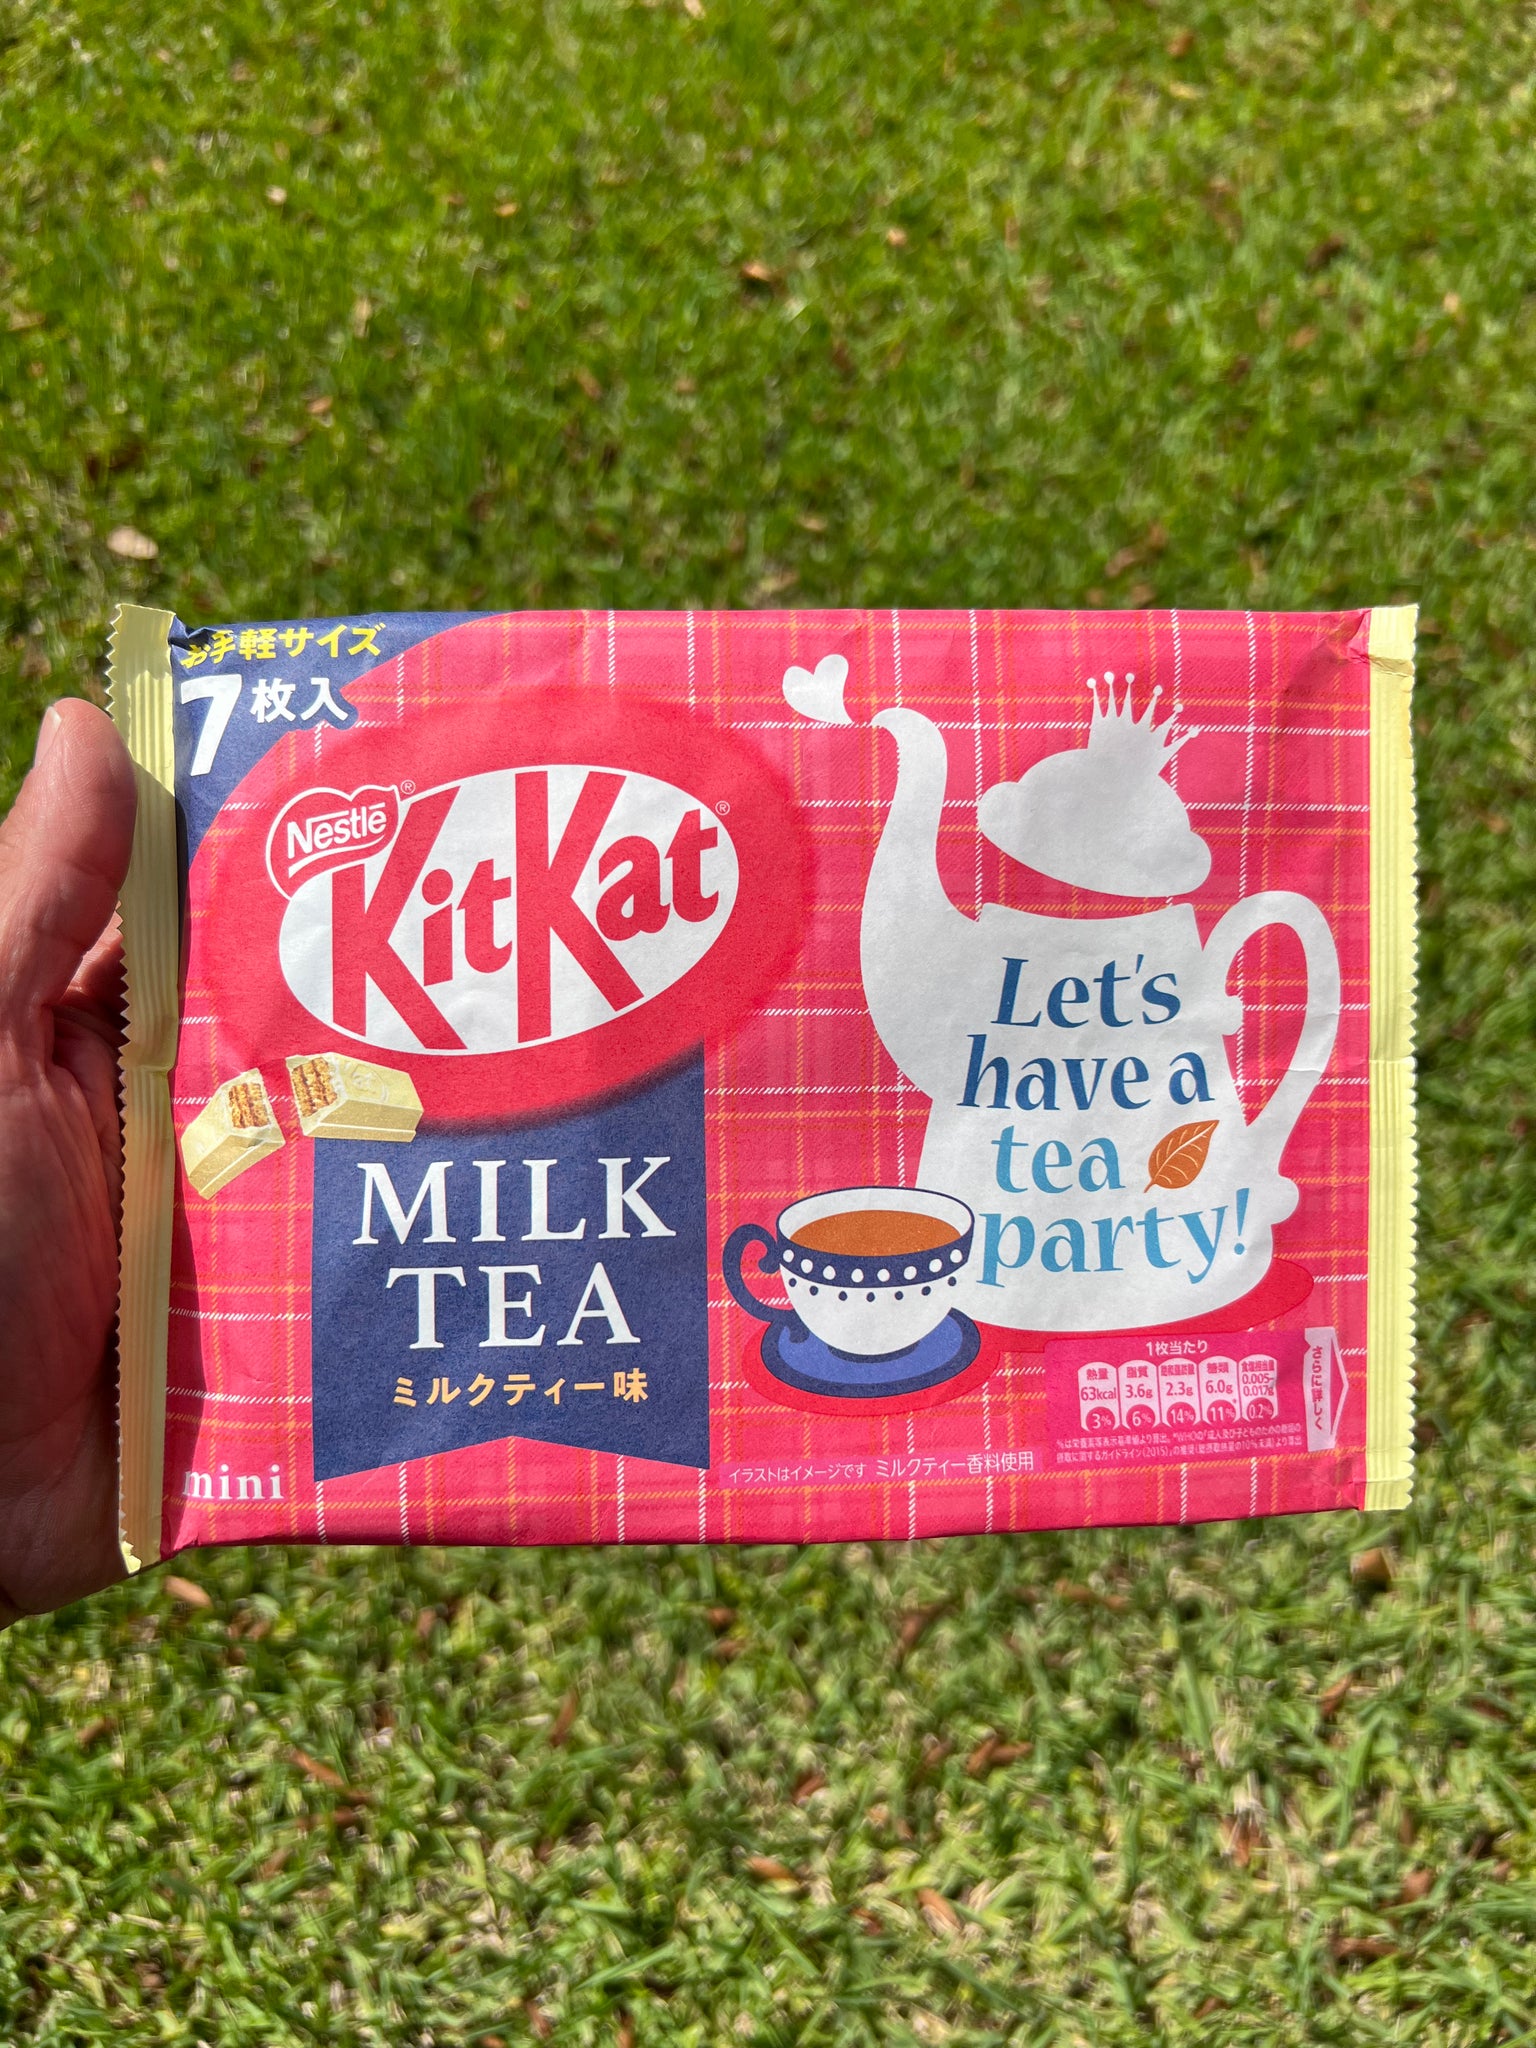 Kit Kat Milk Tea (Japan)